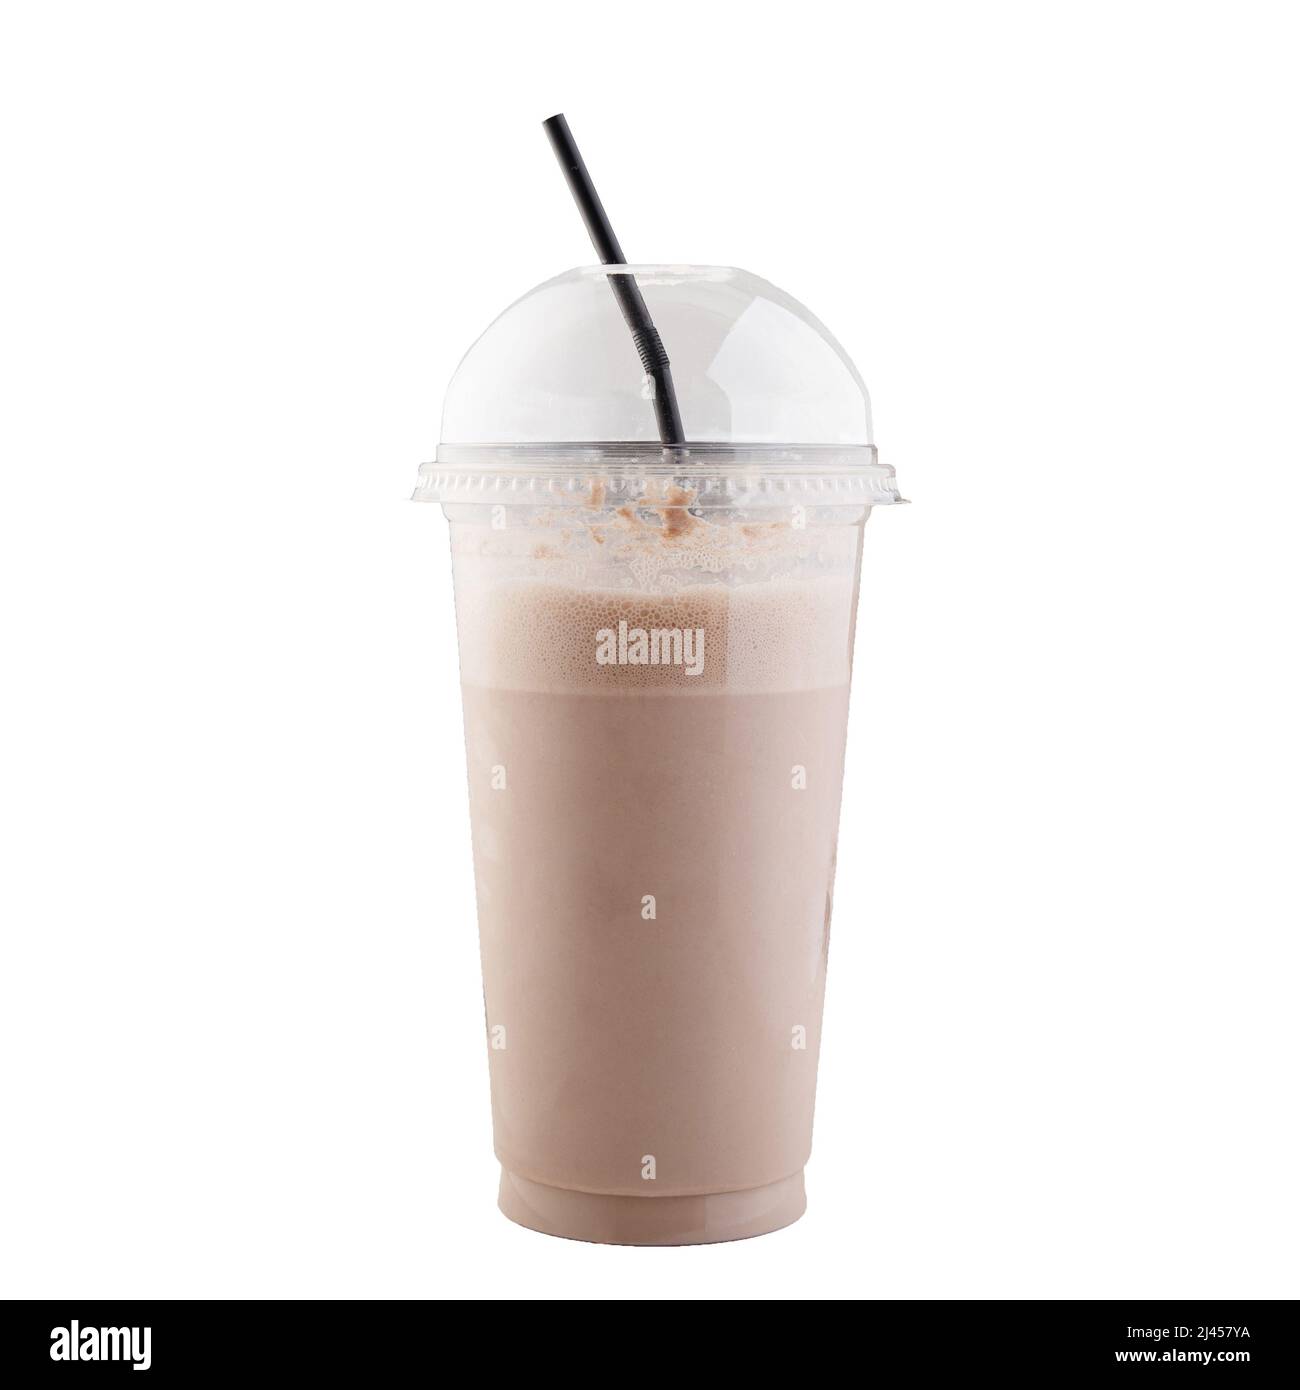 https://c8.alamy.com/comp/2J457YA/chocolate-or-coffee-milkshake-in-plastic-glass-with-straw-isolated-on-white-background-2J457YA.jpg